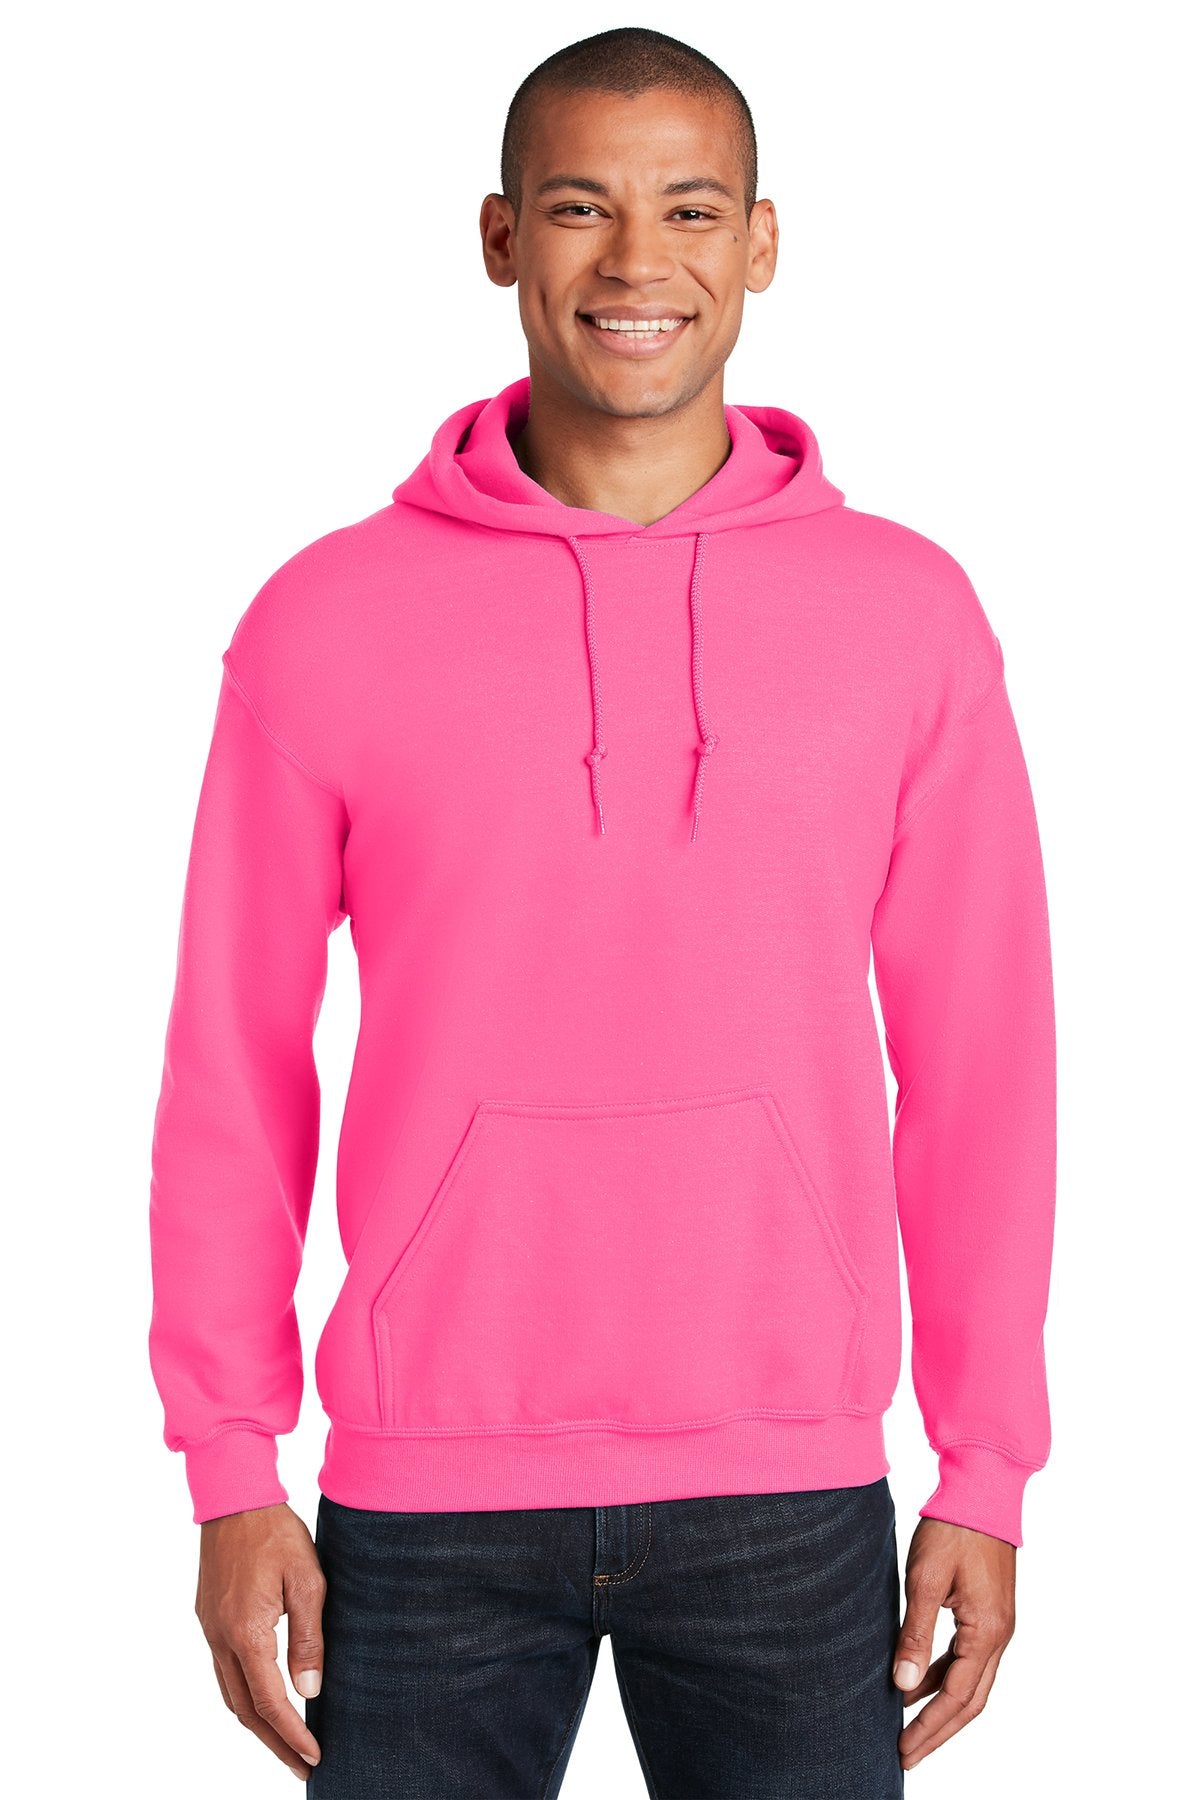 Gildan Safety Pink 18500 custom embroidery sweatshirts